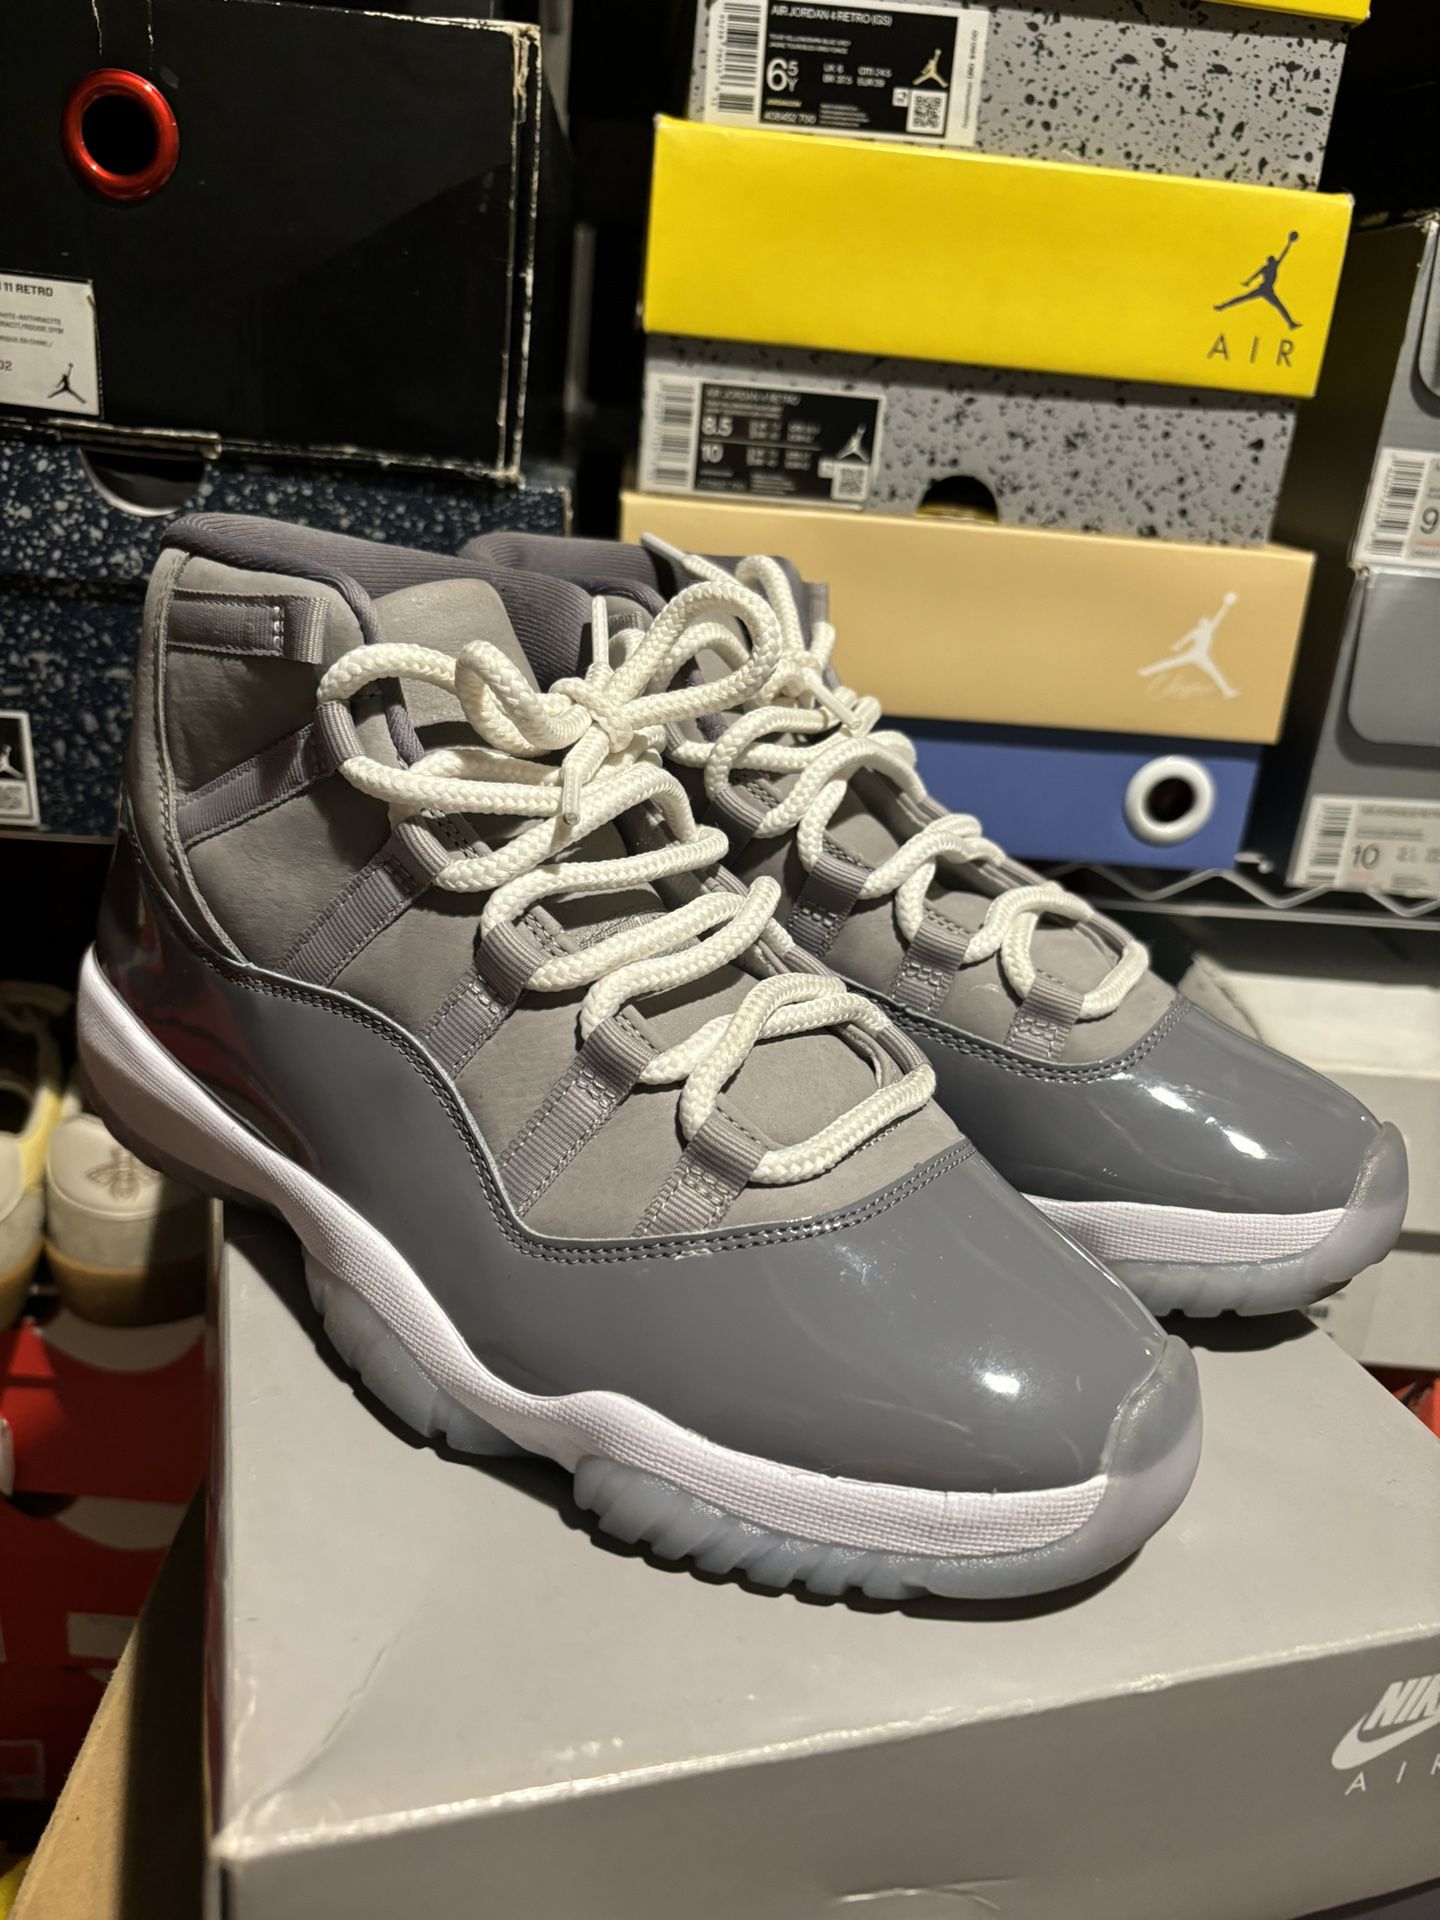 Jordan 11 Cool Grey Size 9